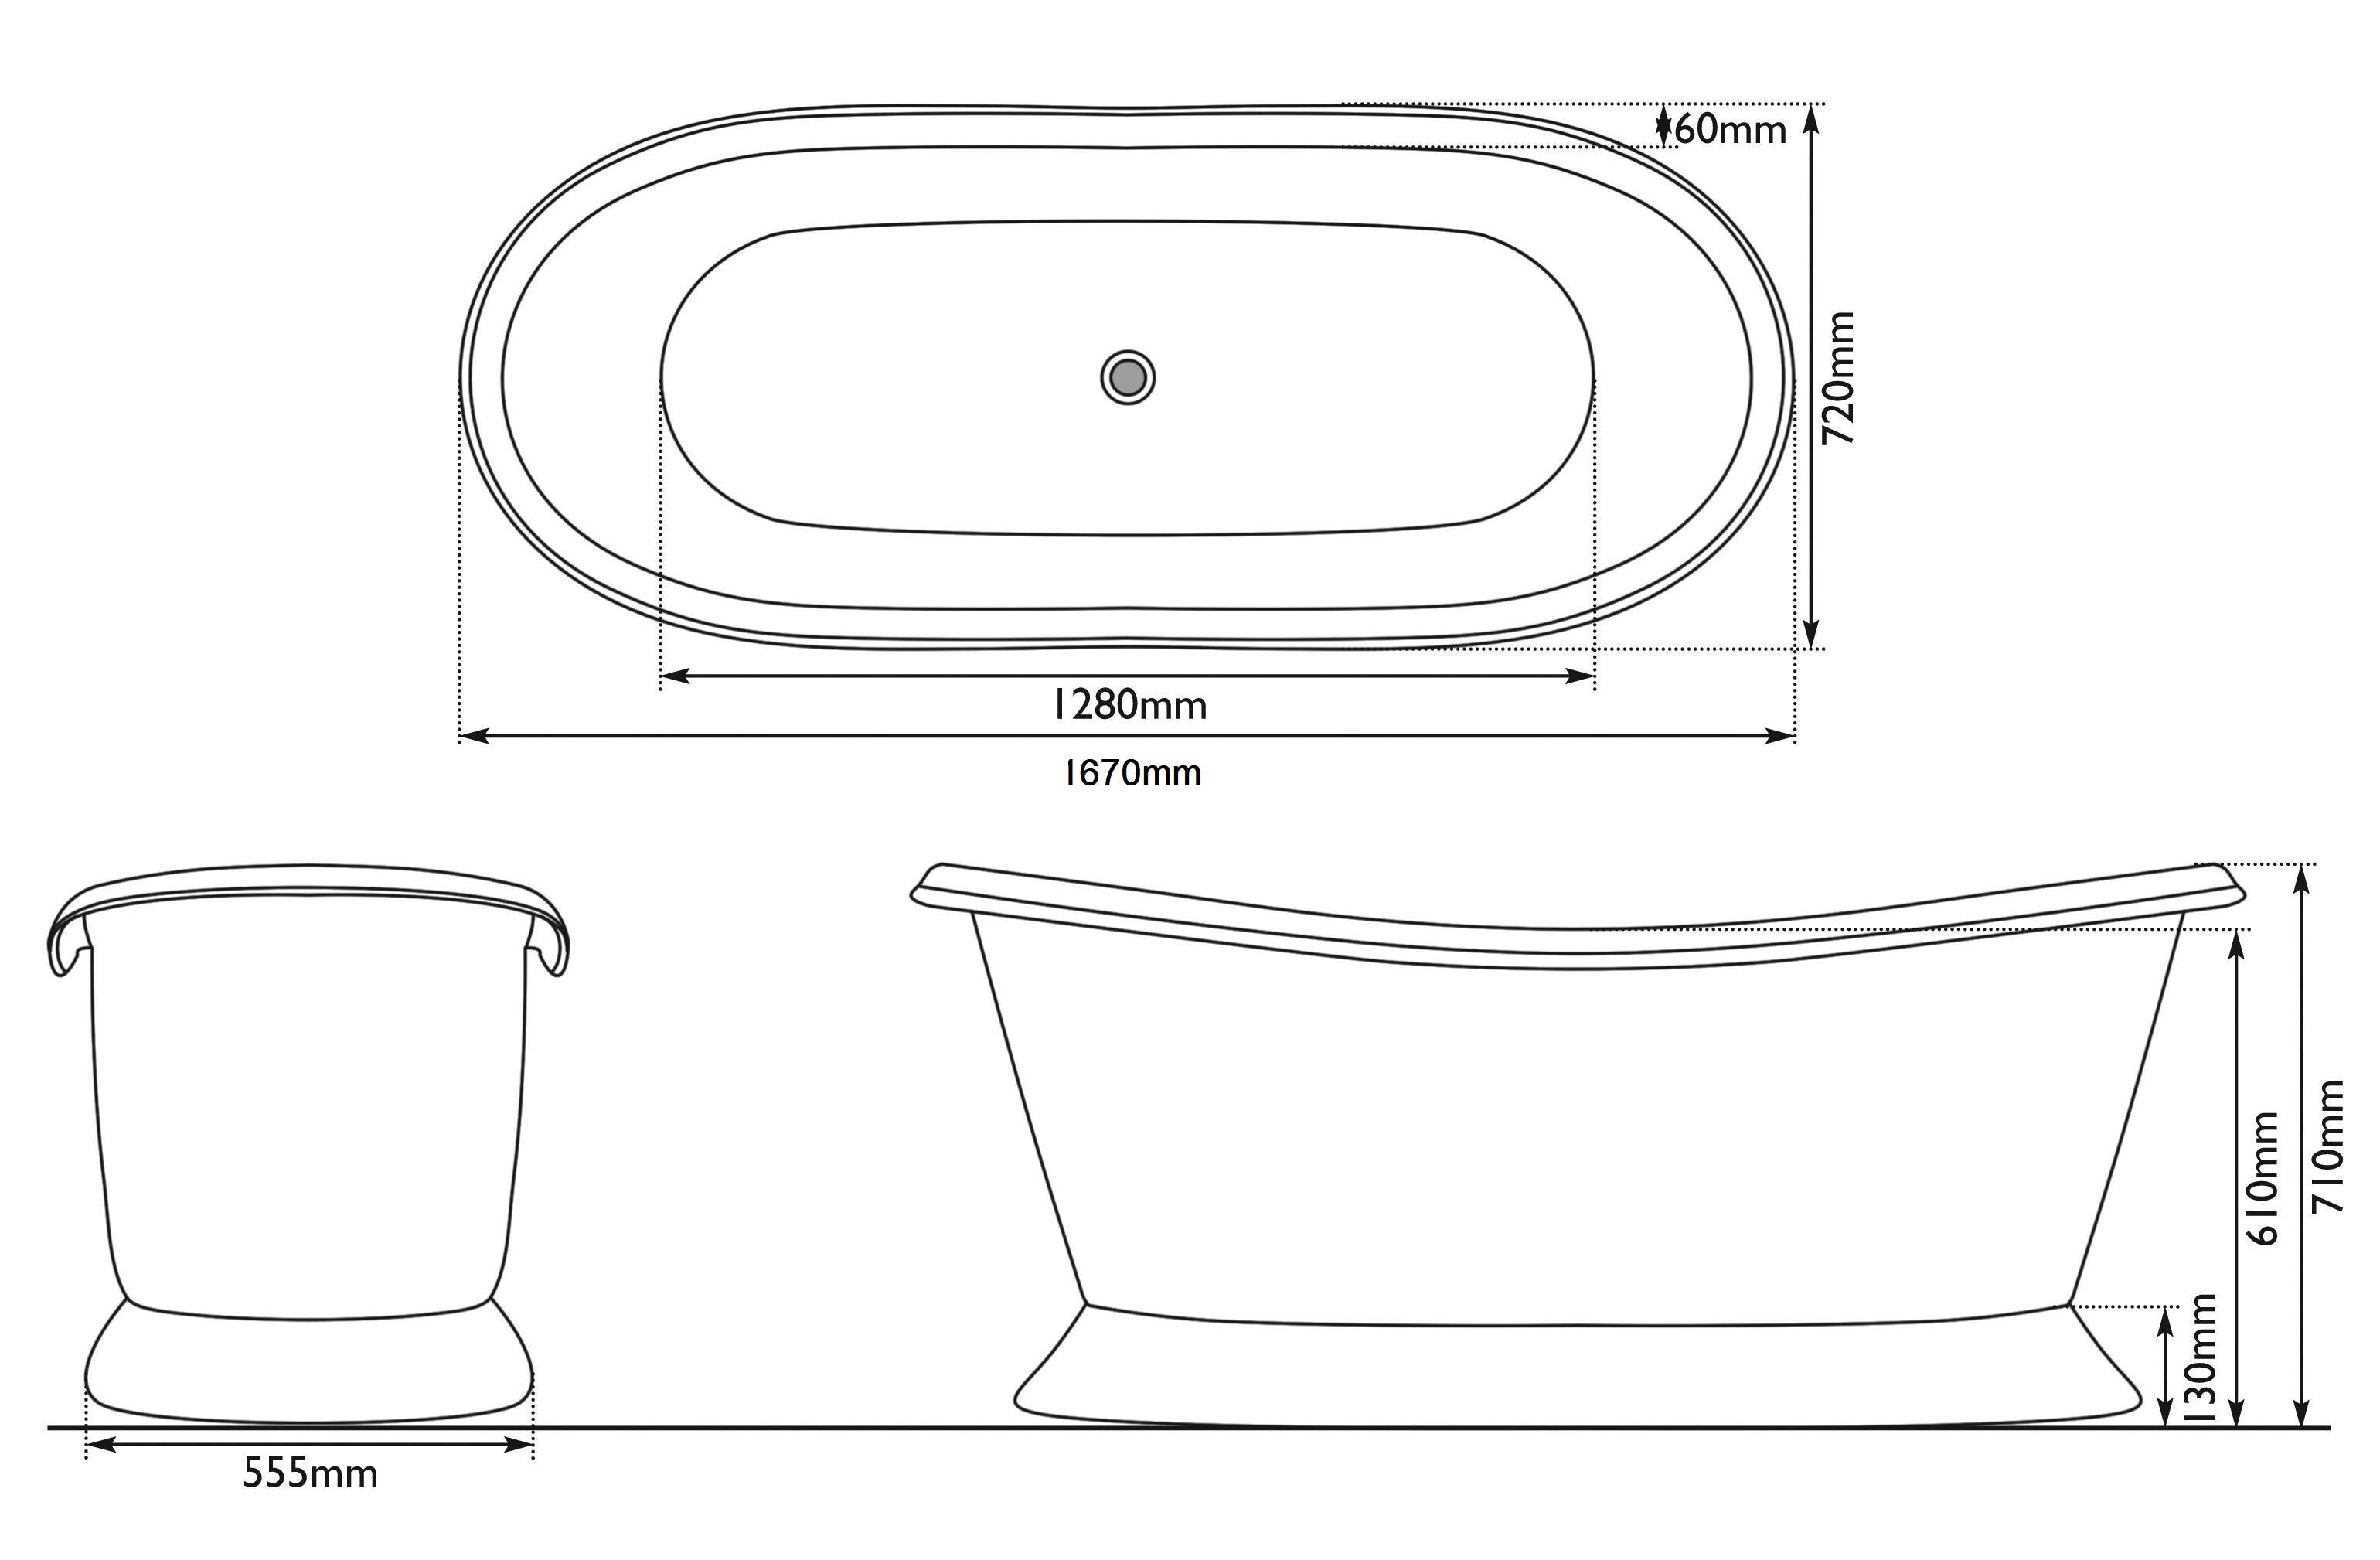 Dimensions Of Copper External and Nickel Internal Bateau Bath